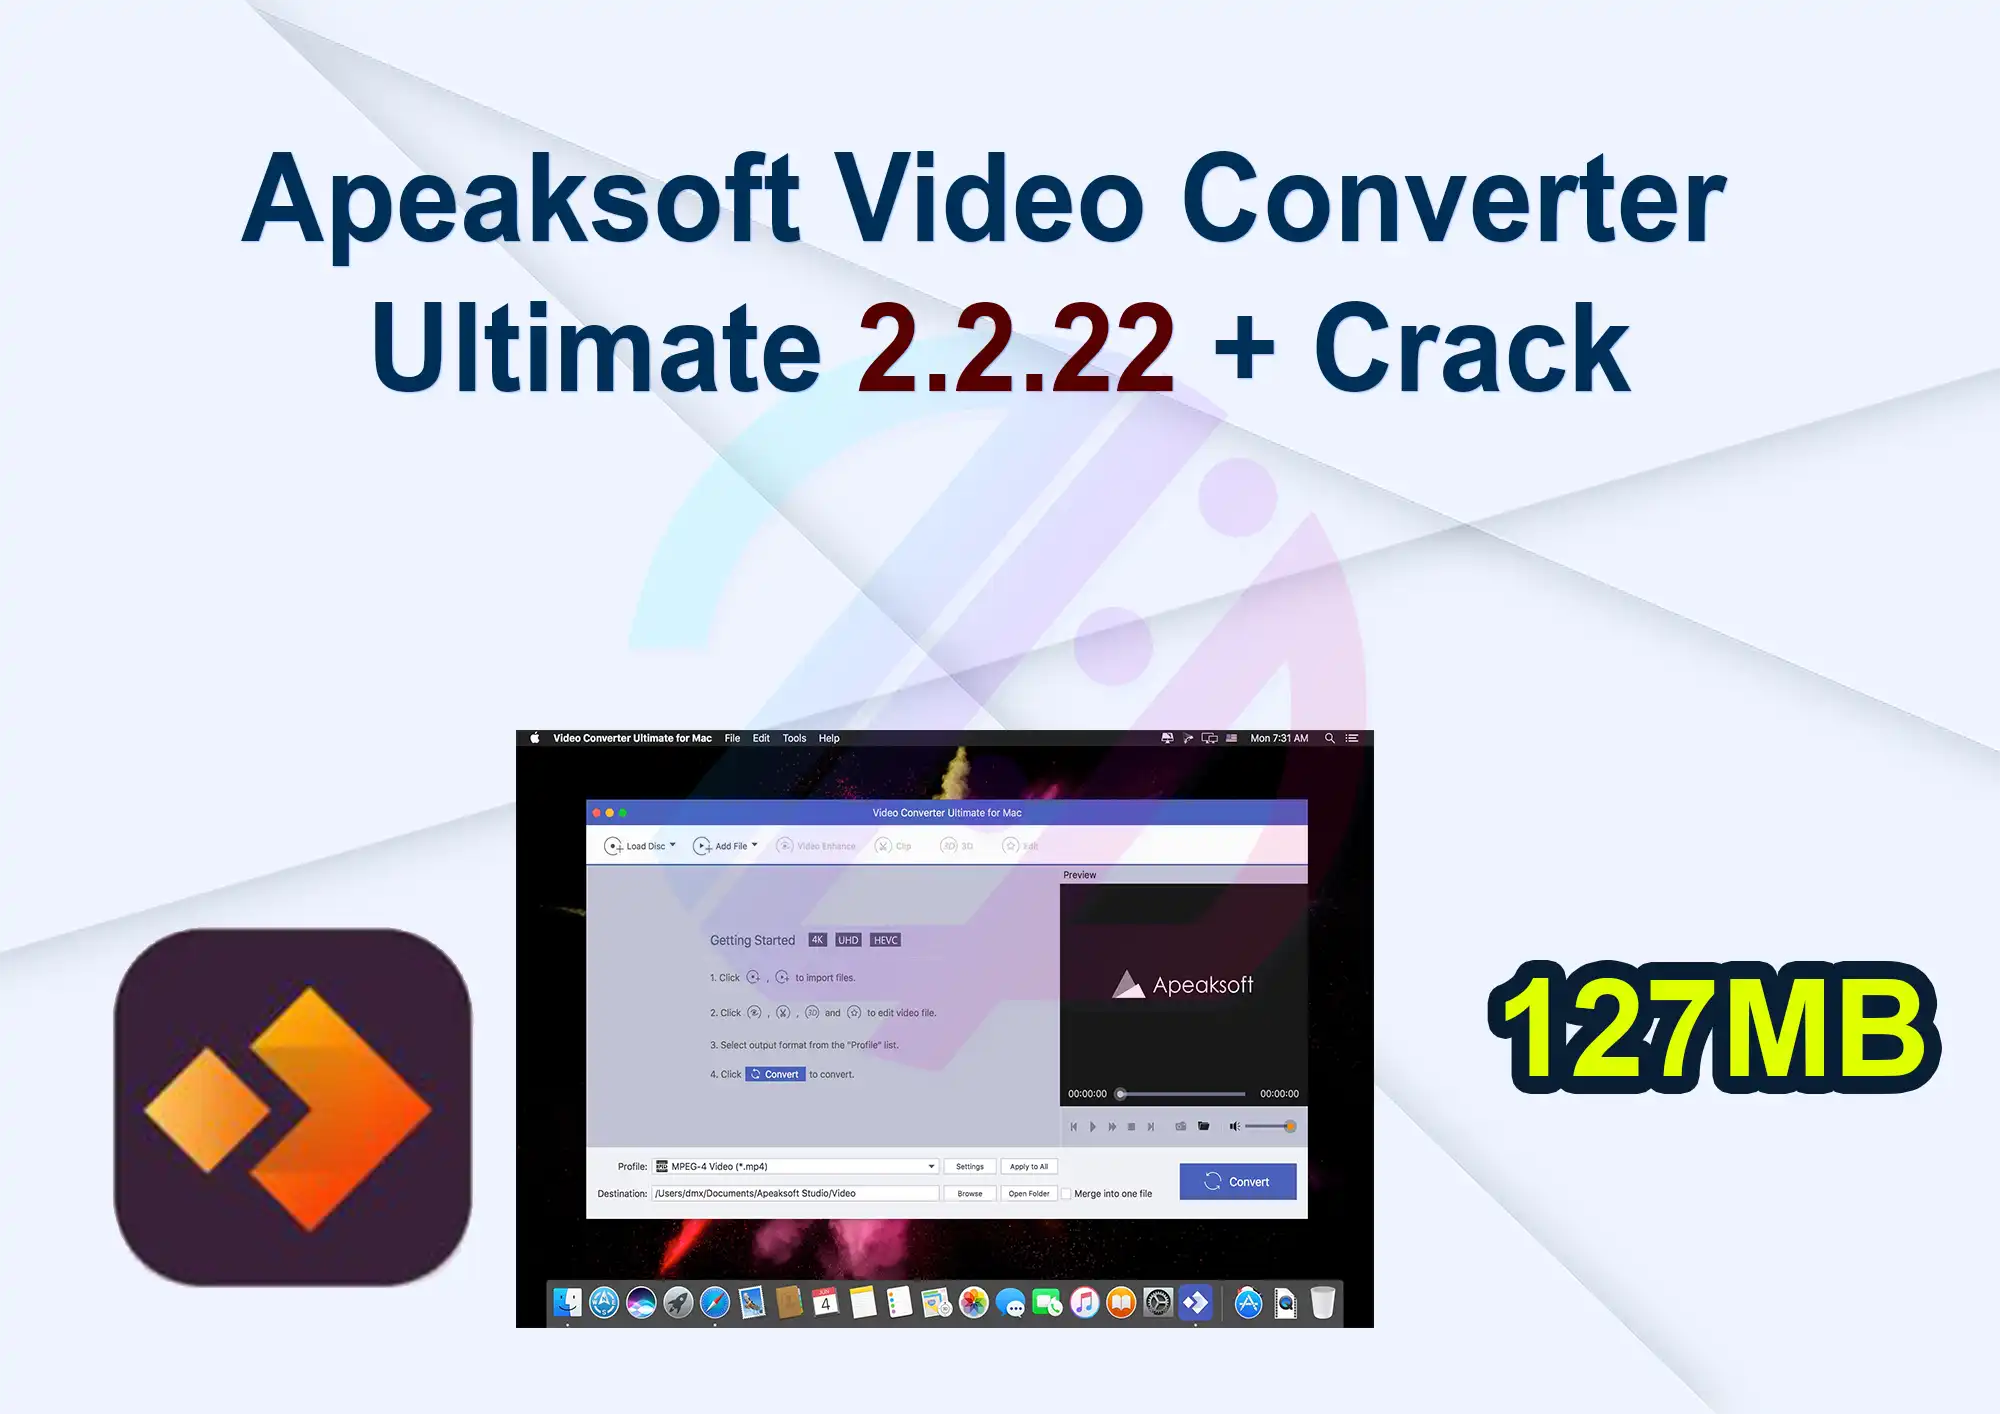 Apeaksoft Video Converter Ultimate 2.2.22 + Crack